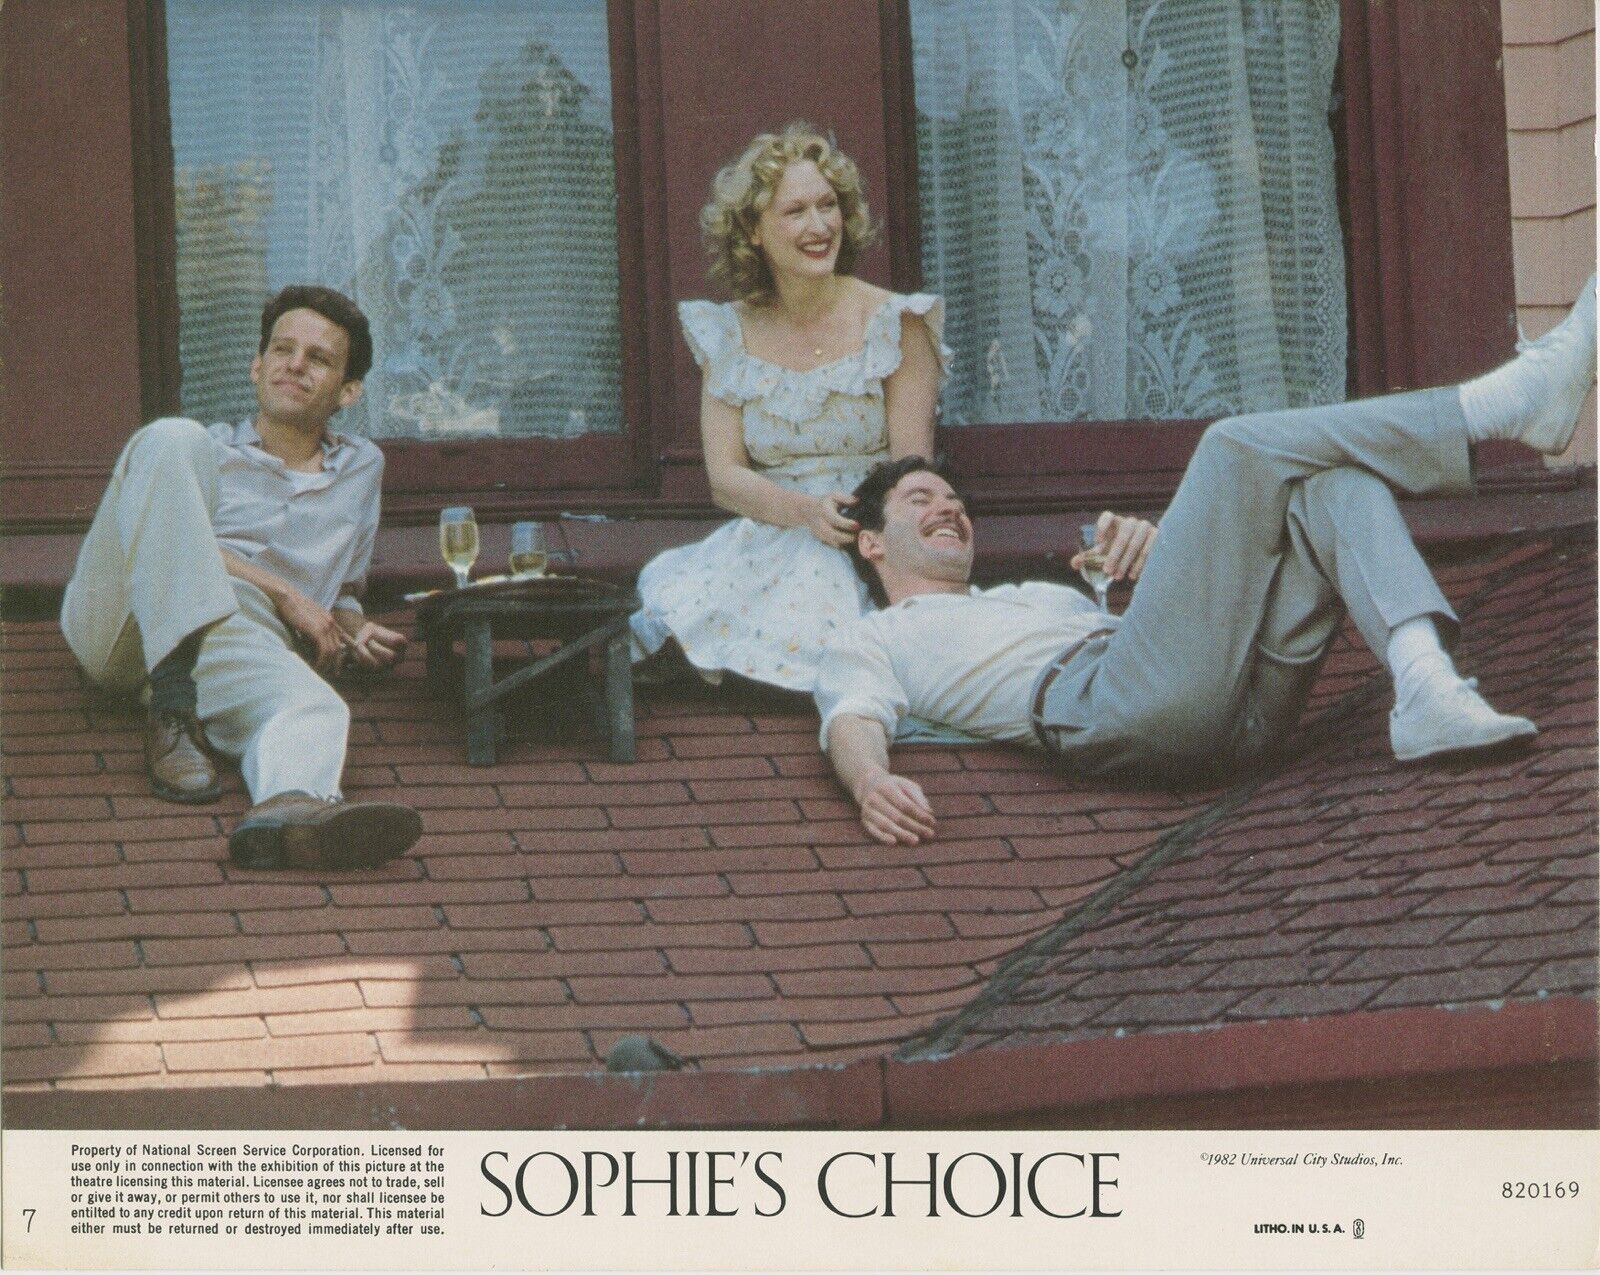 SOPHIE'S CHOICE Meryl Streep Kevin Kline A1983 A19 Vintage Offset Print Poster